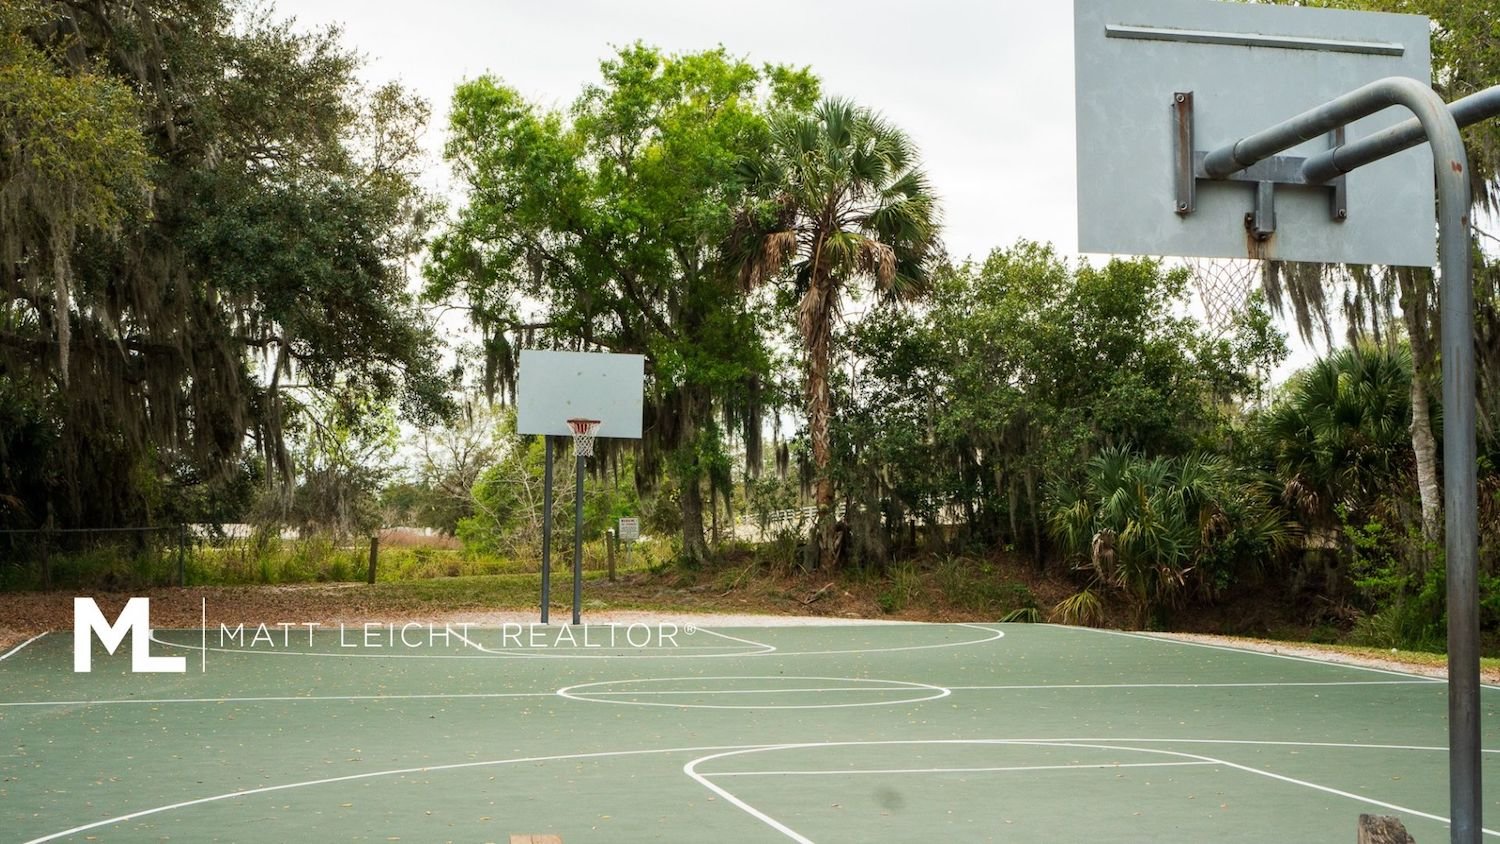 Colonial Oaks Park Basketball